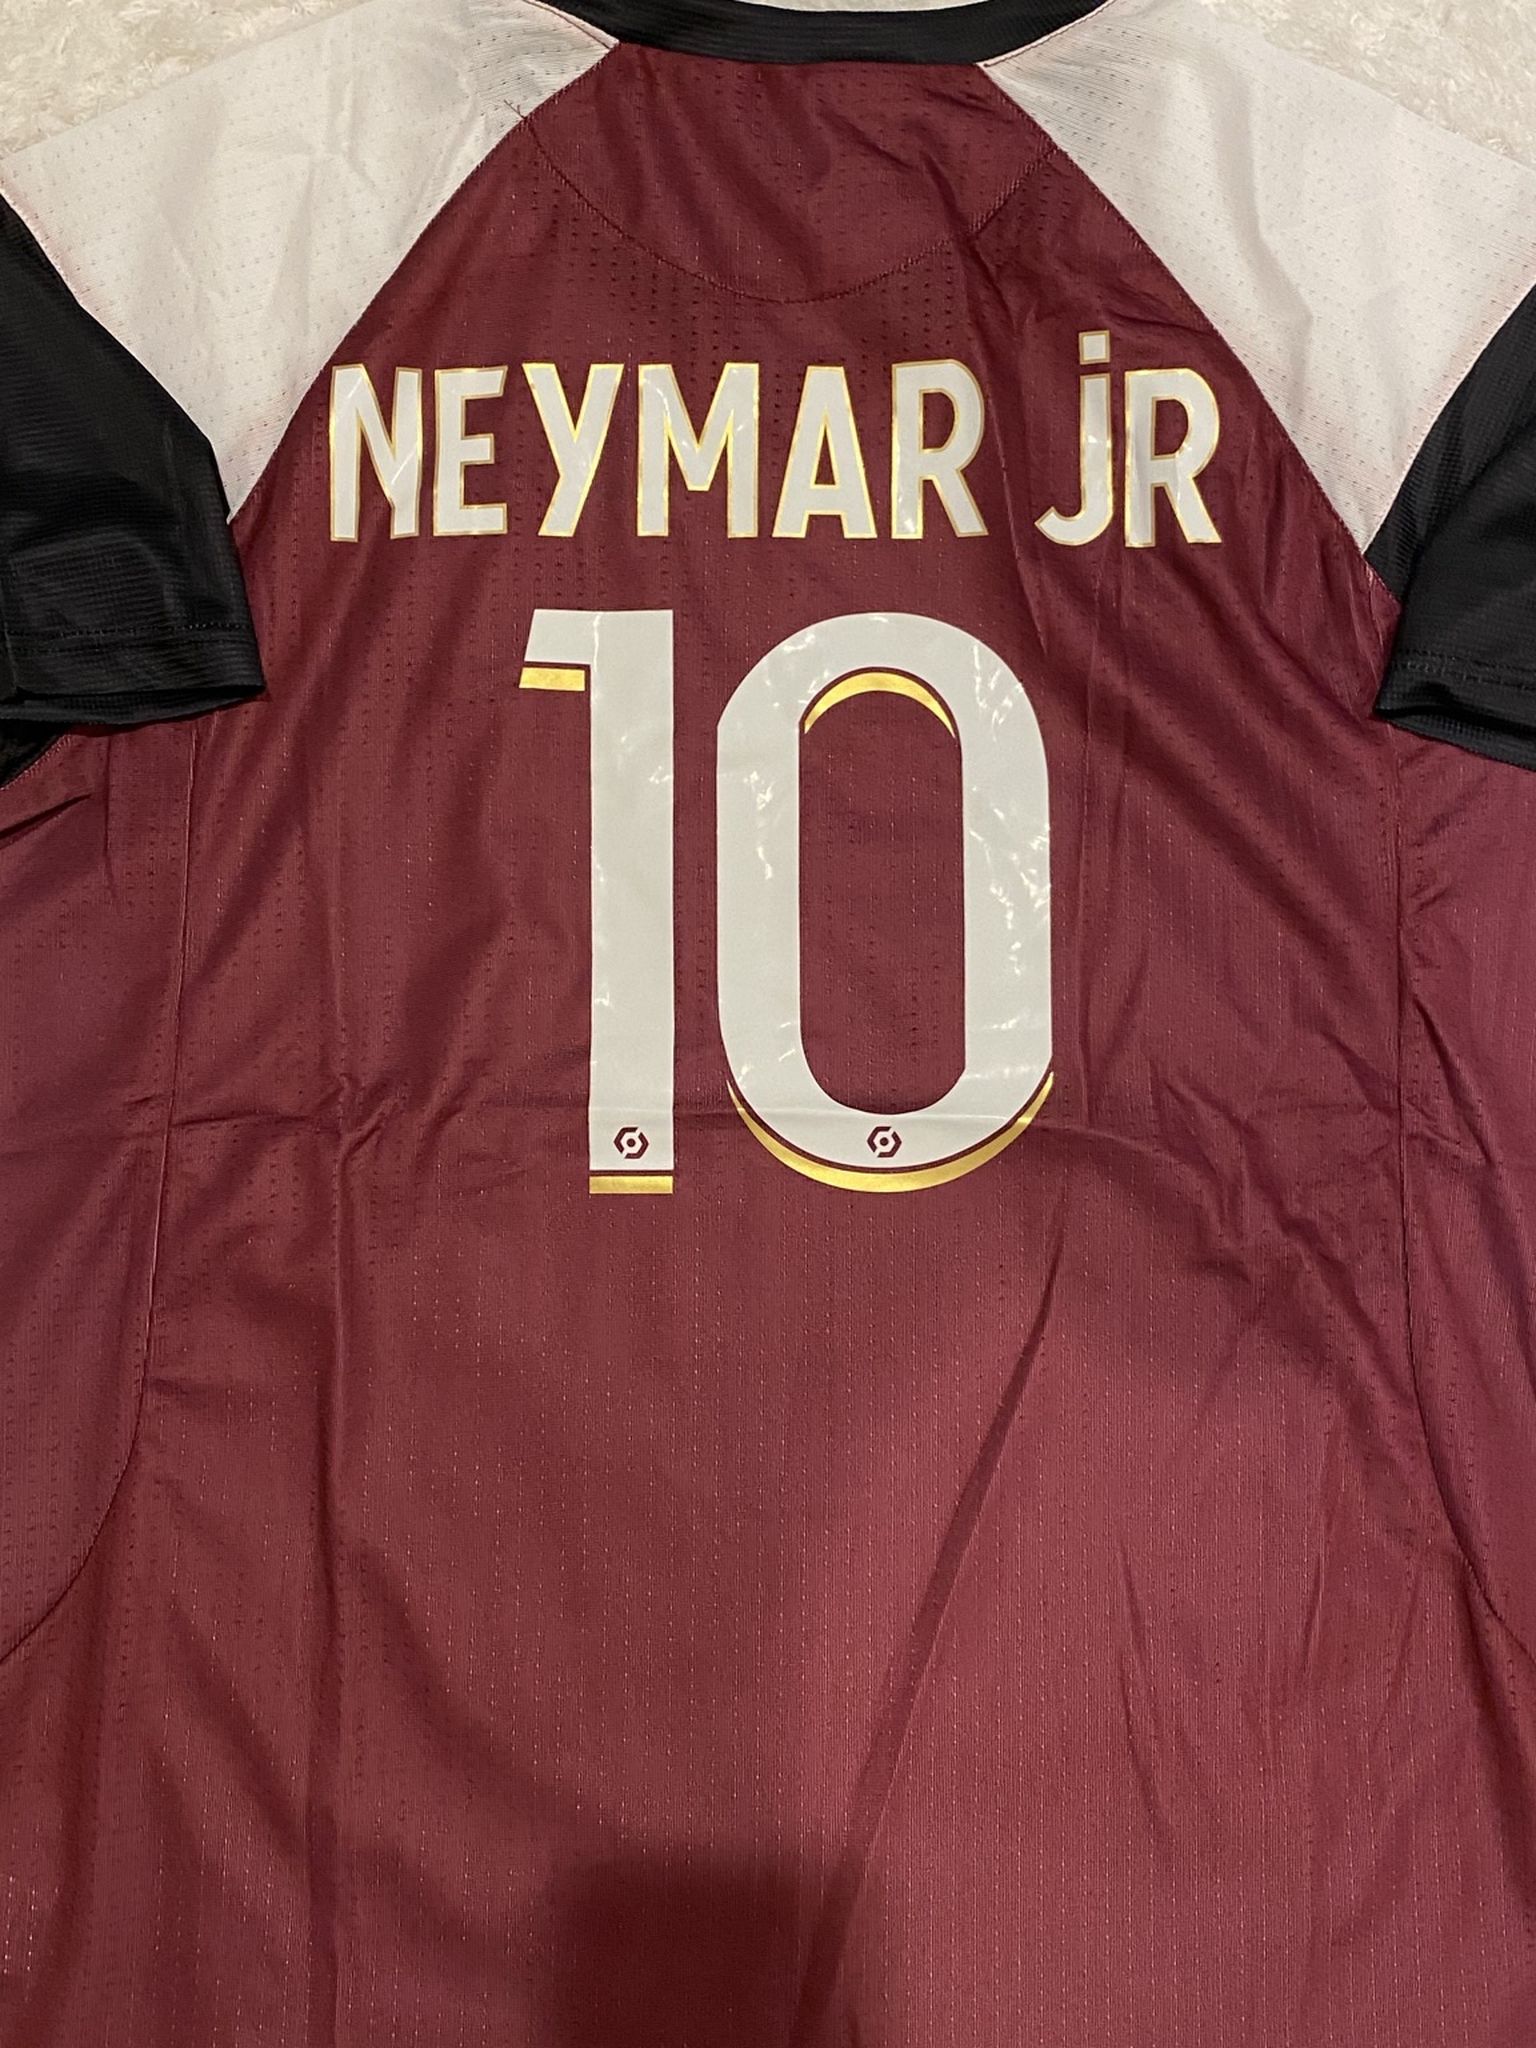 Neymar Jr #10 PSG Awy soccer jersey L